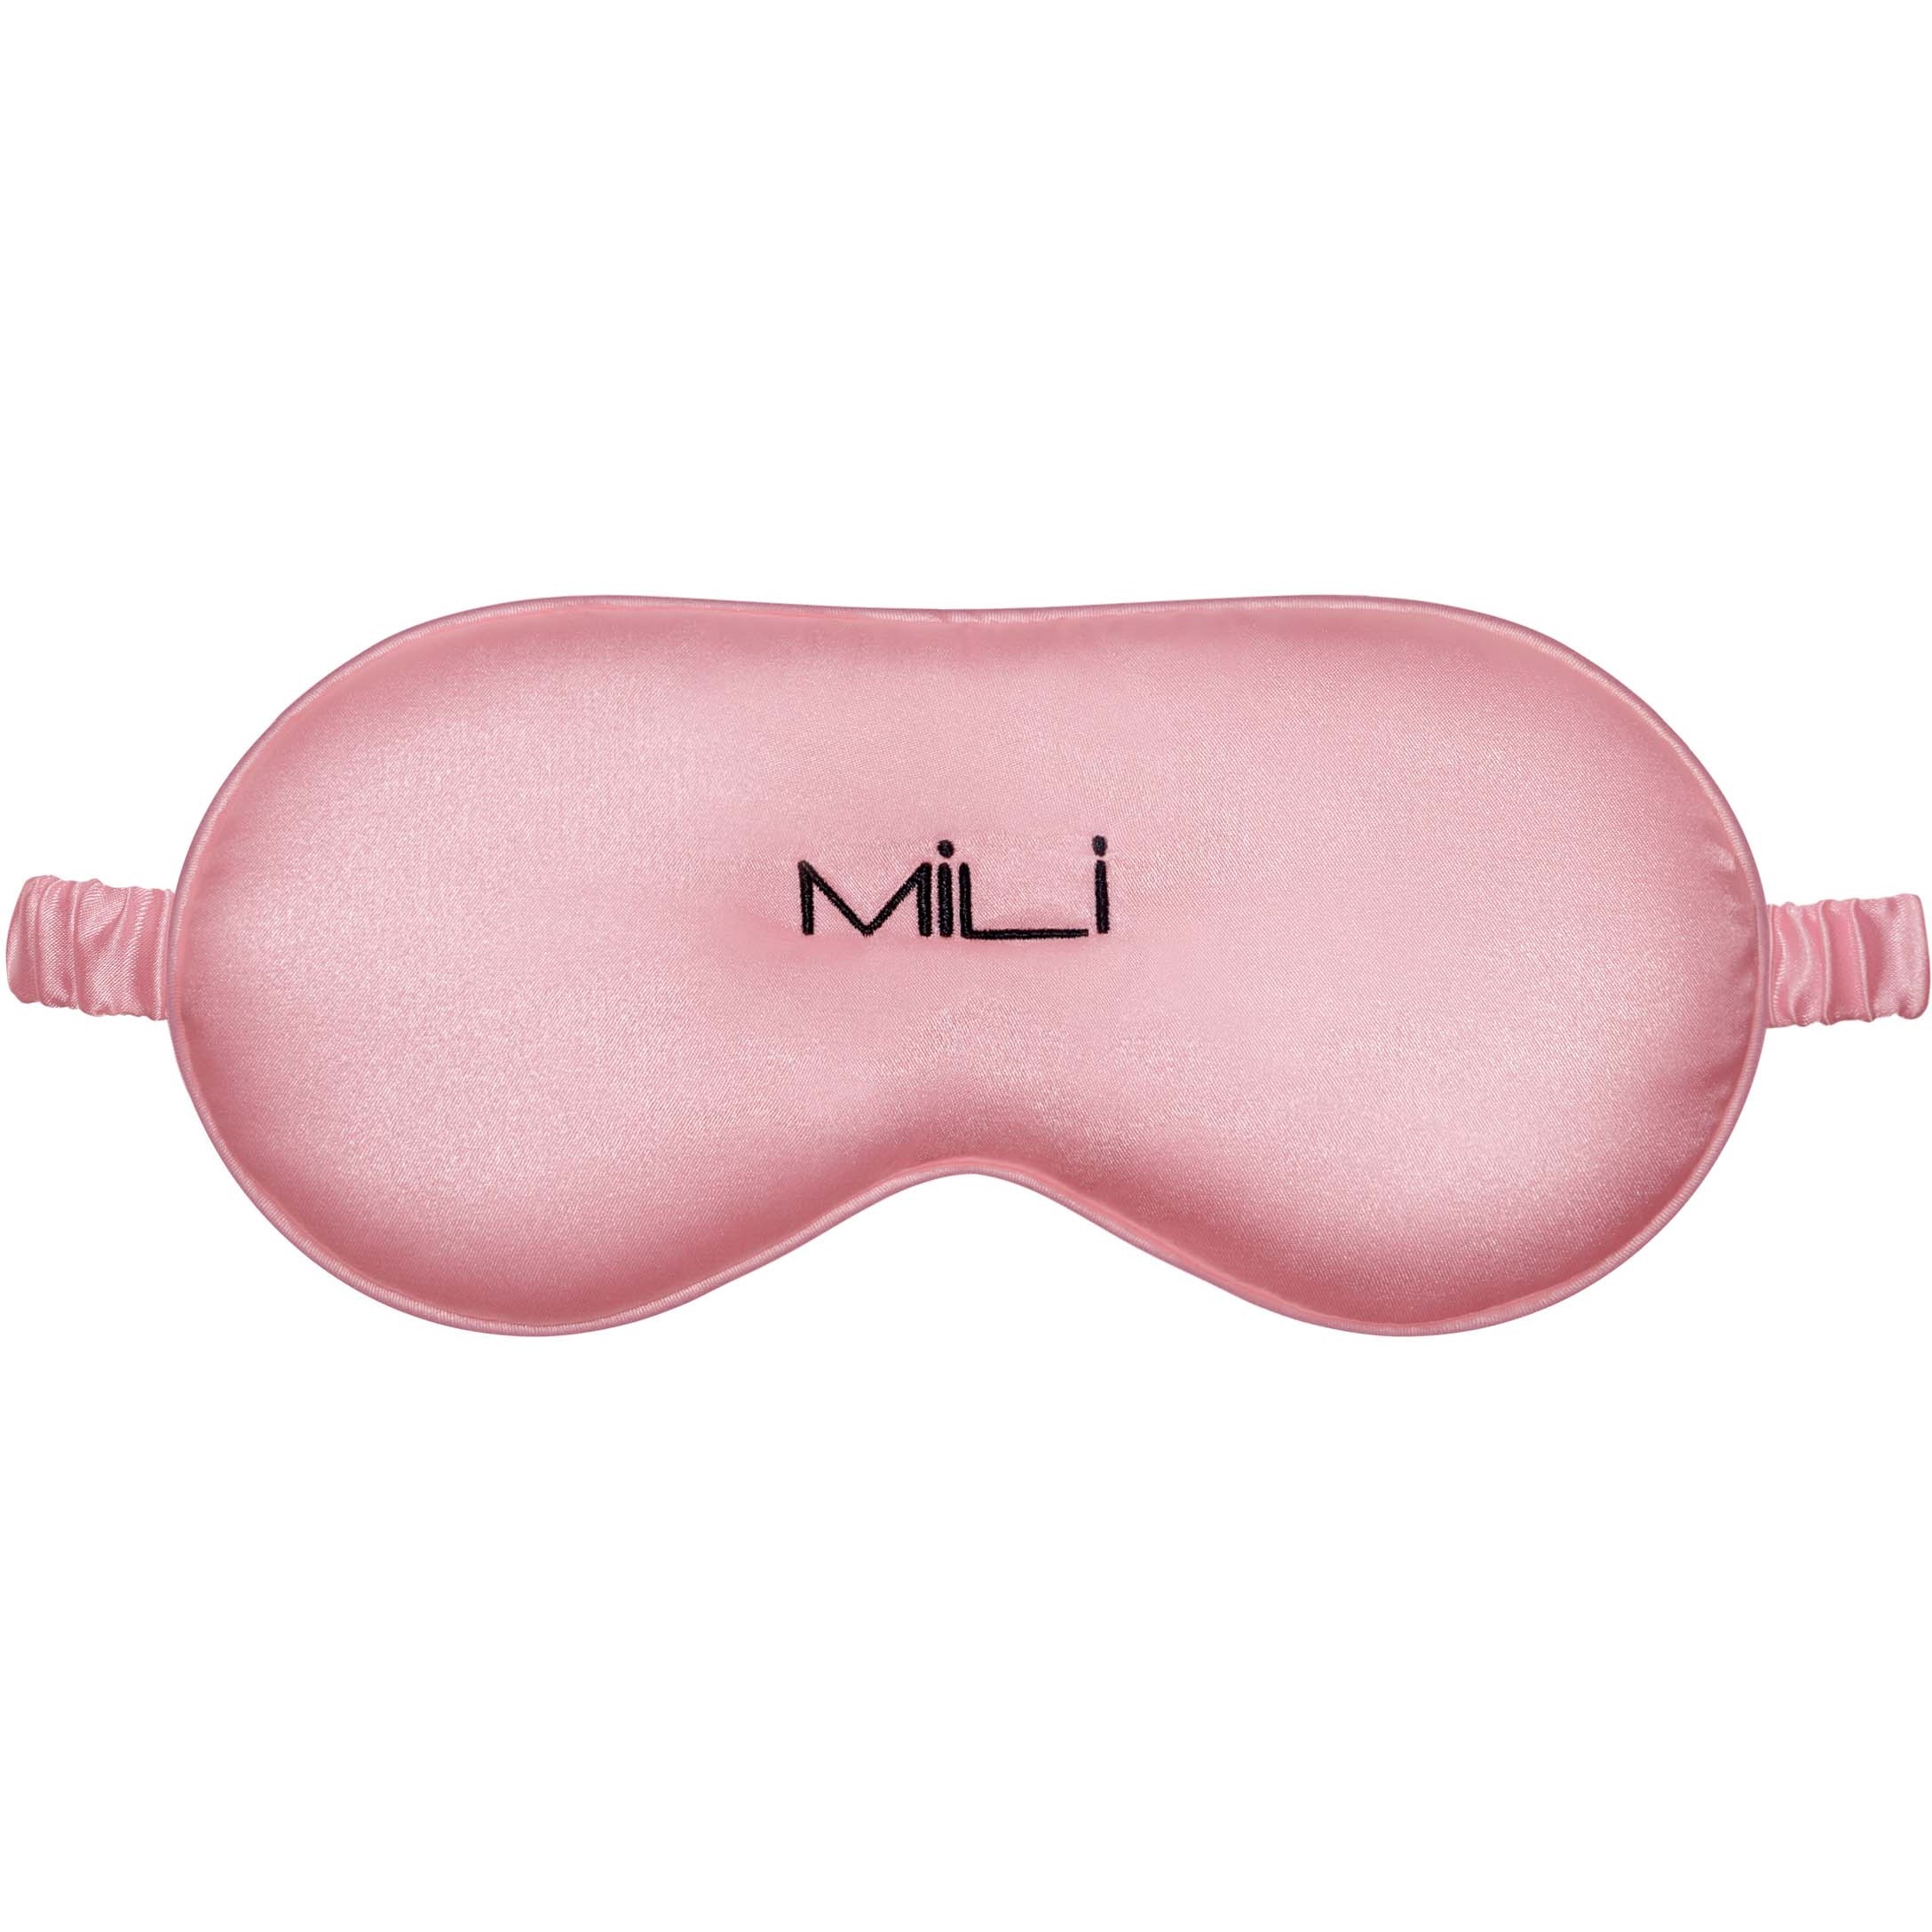 MILI Cosmetics Sleep Deep Mask Pink